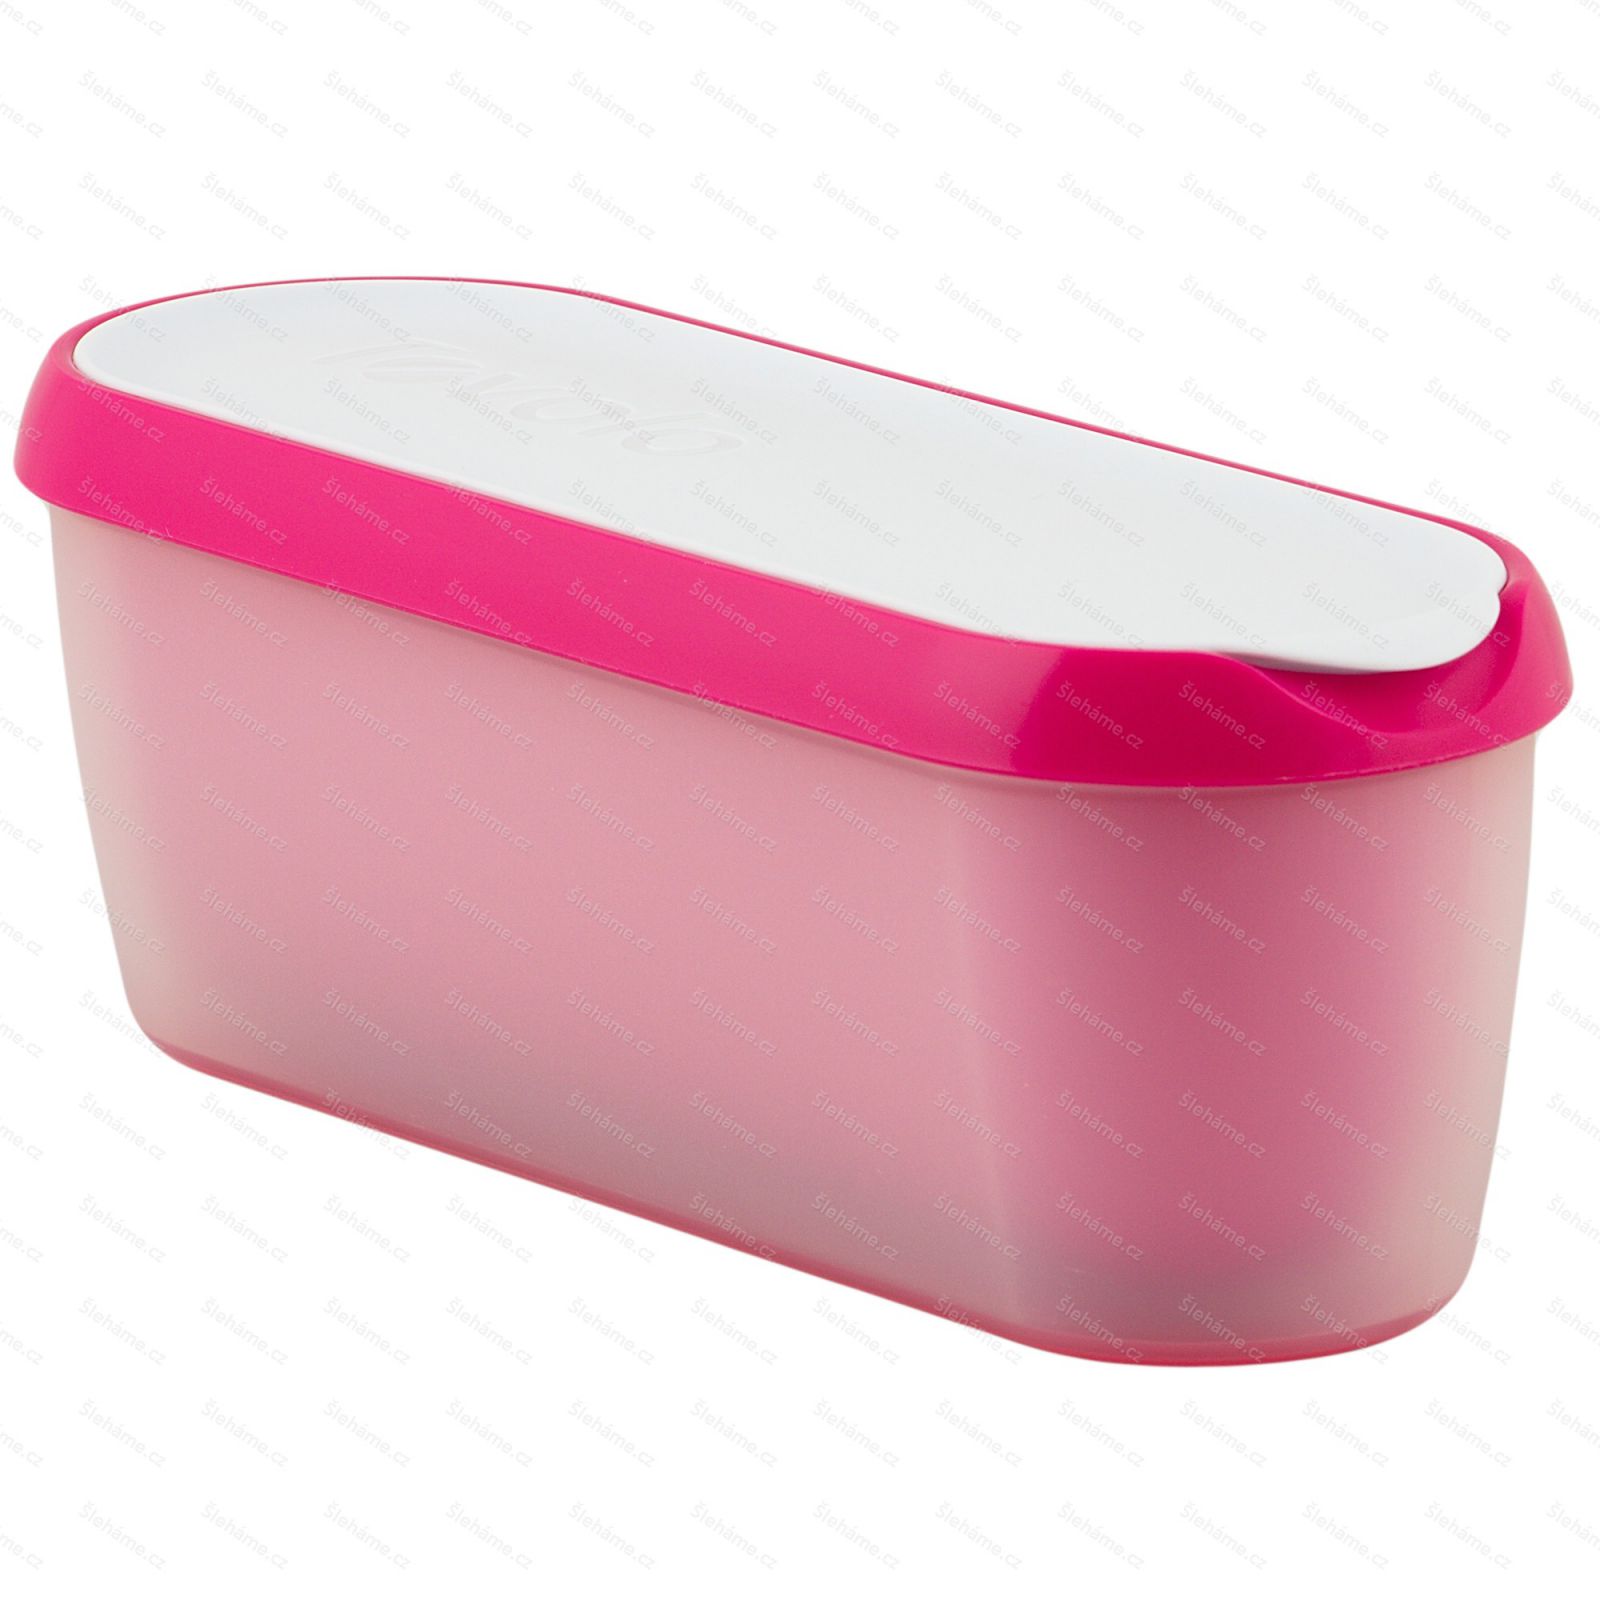 Ice cream tub Tovolo GLIDE-A-SCOOP 1.4 l, raspberry tart - main view